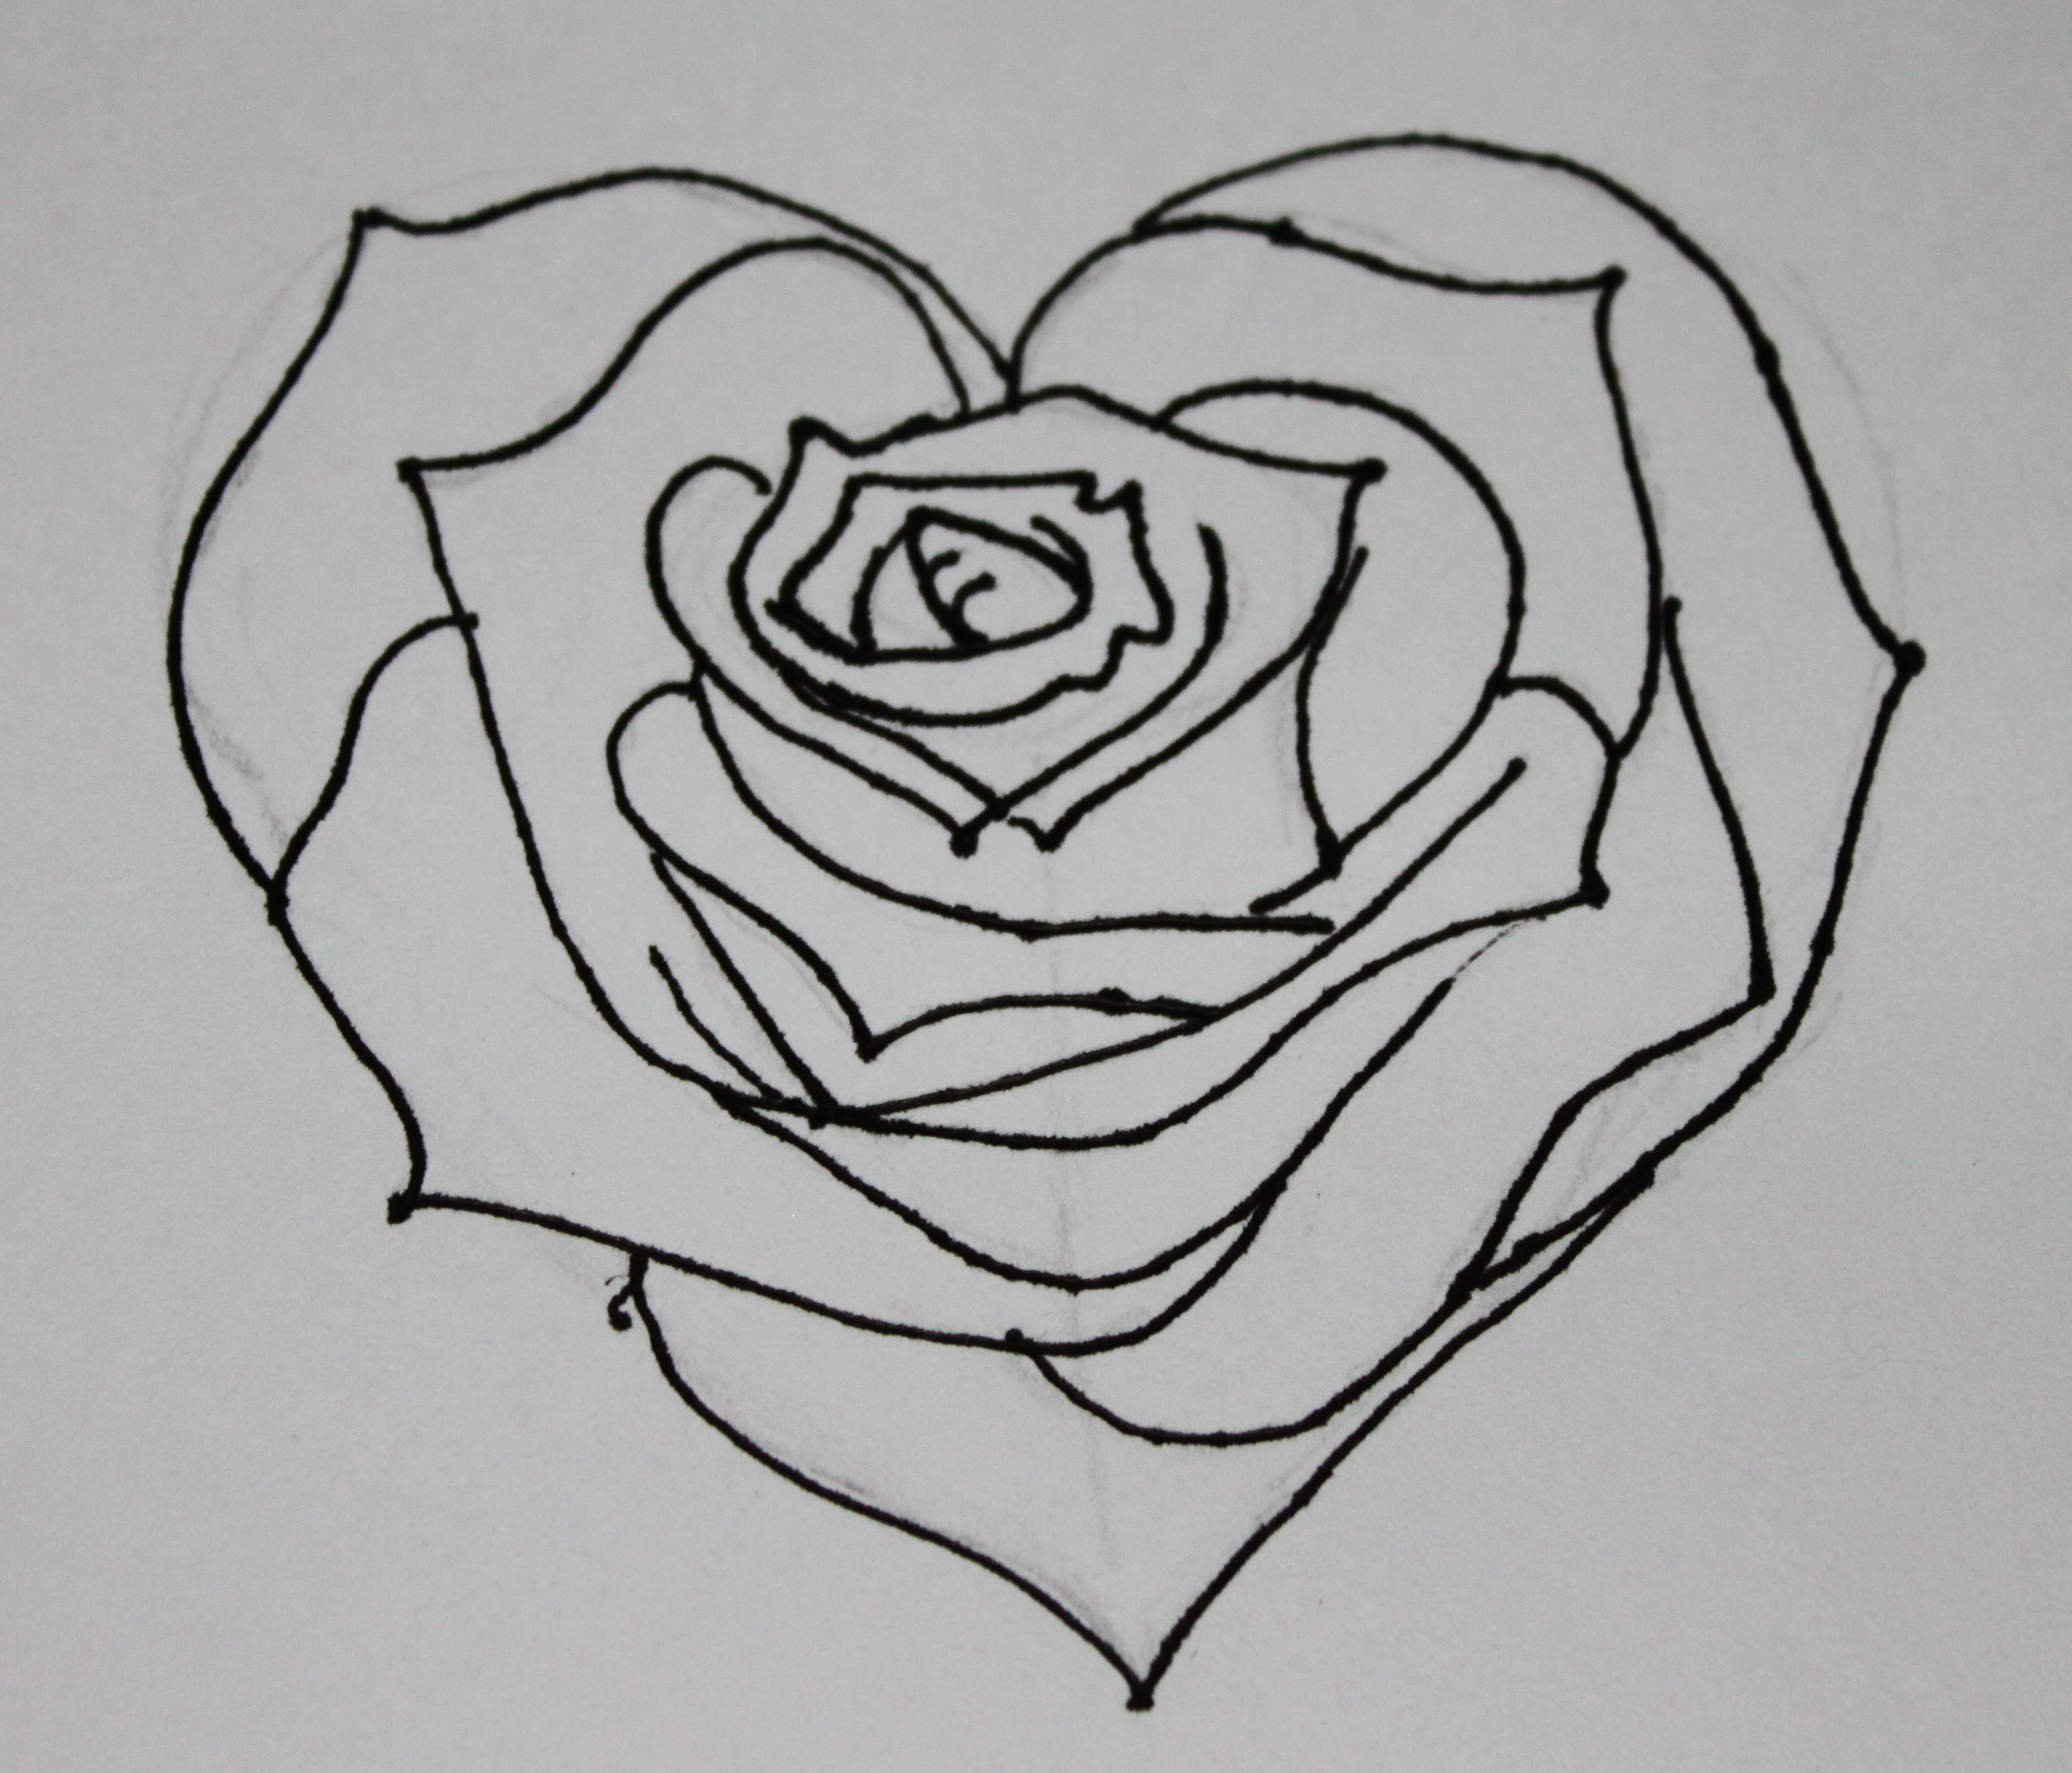 Graffiti flower drawings attempt of rose heart drawing jpg